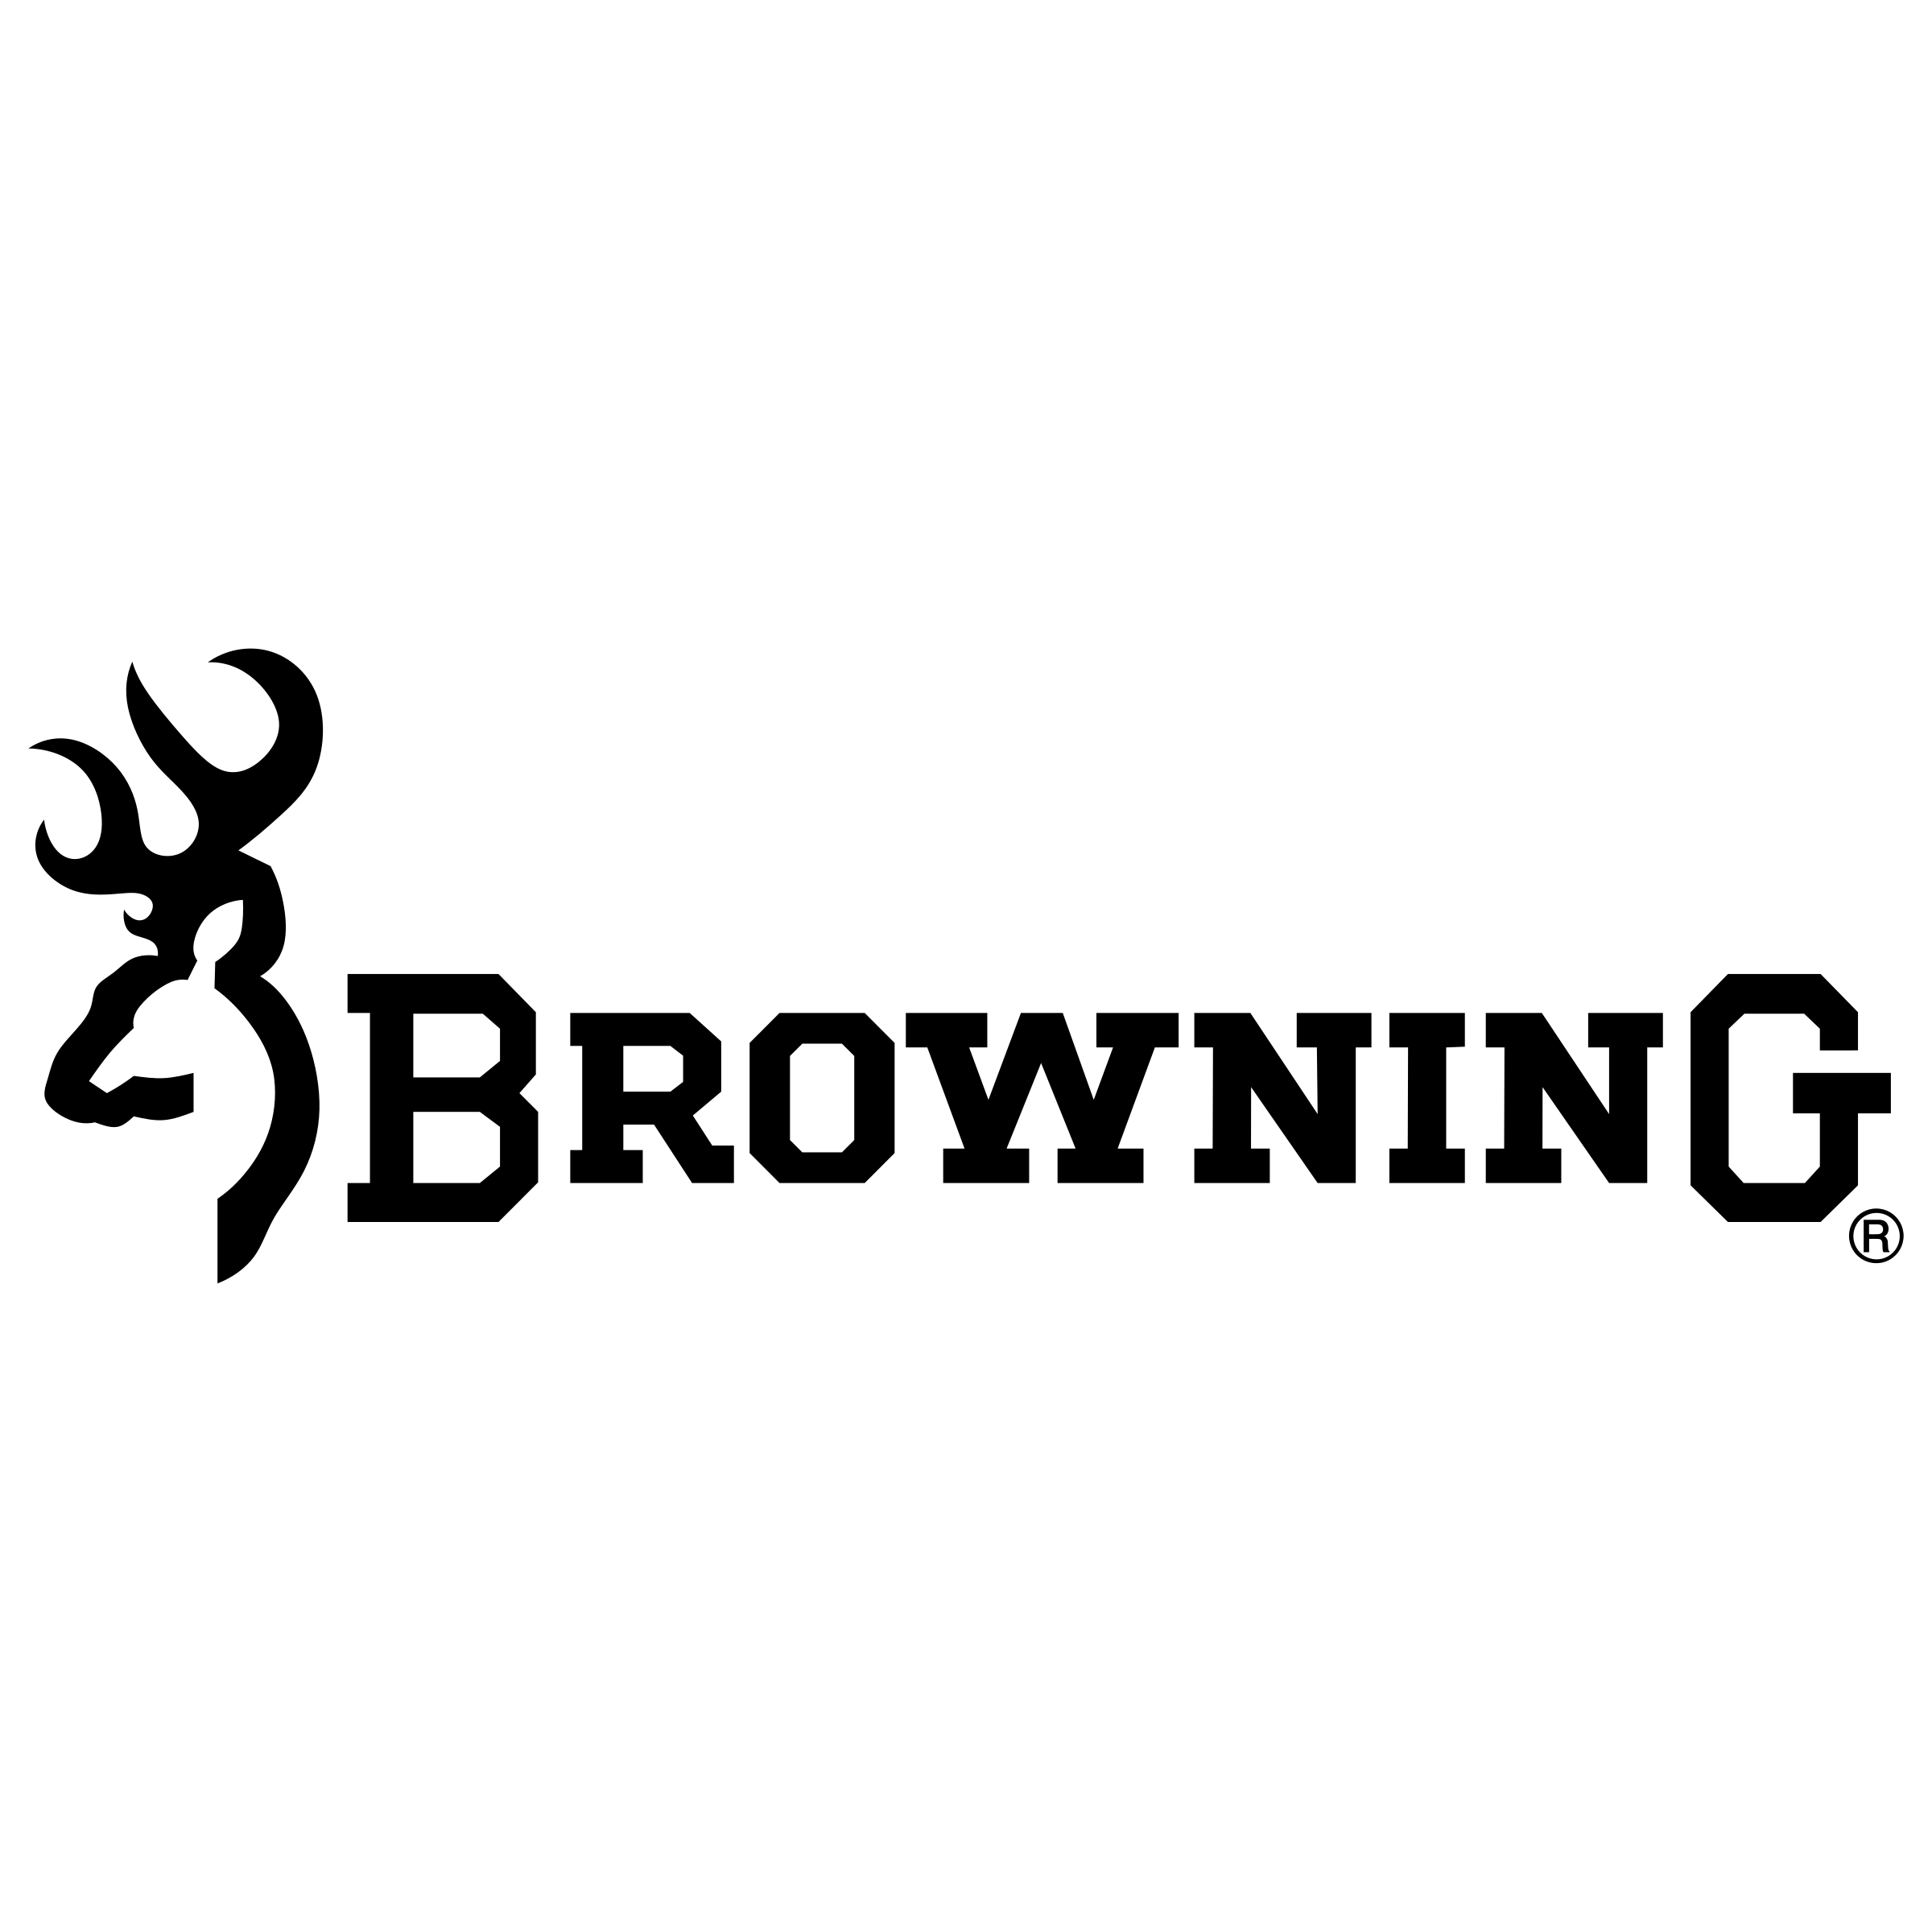 White Browning Logo - Browning Logo PNG Transparent & SVG Vector - Freebie Supply